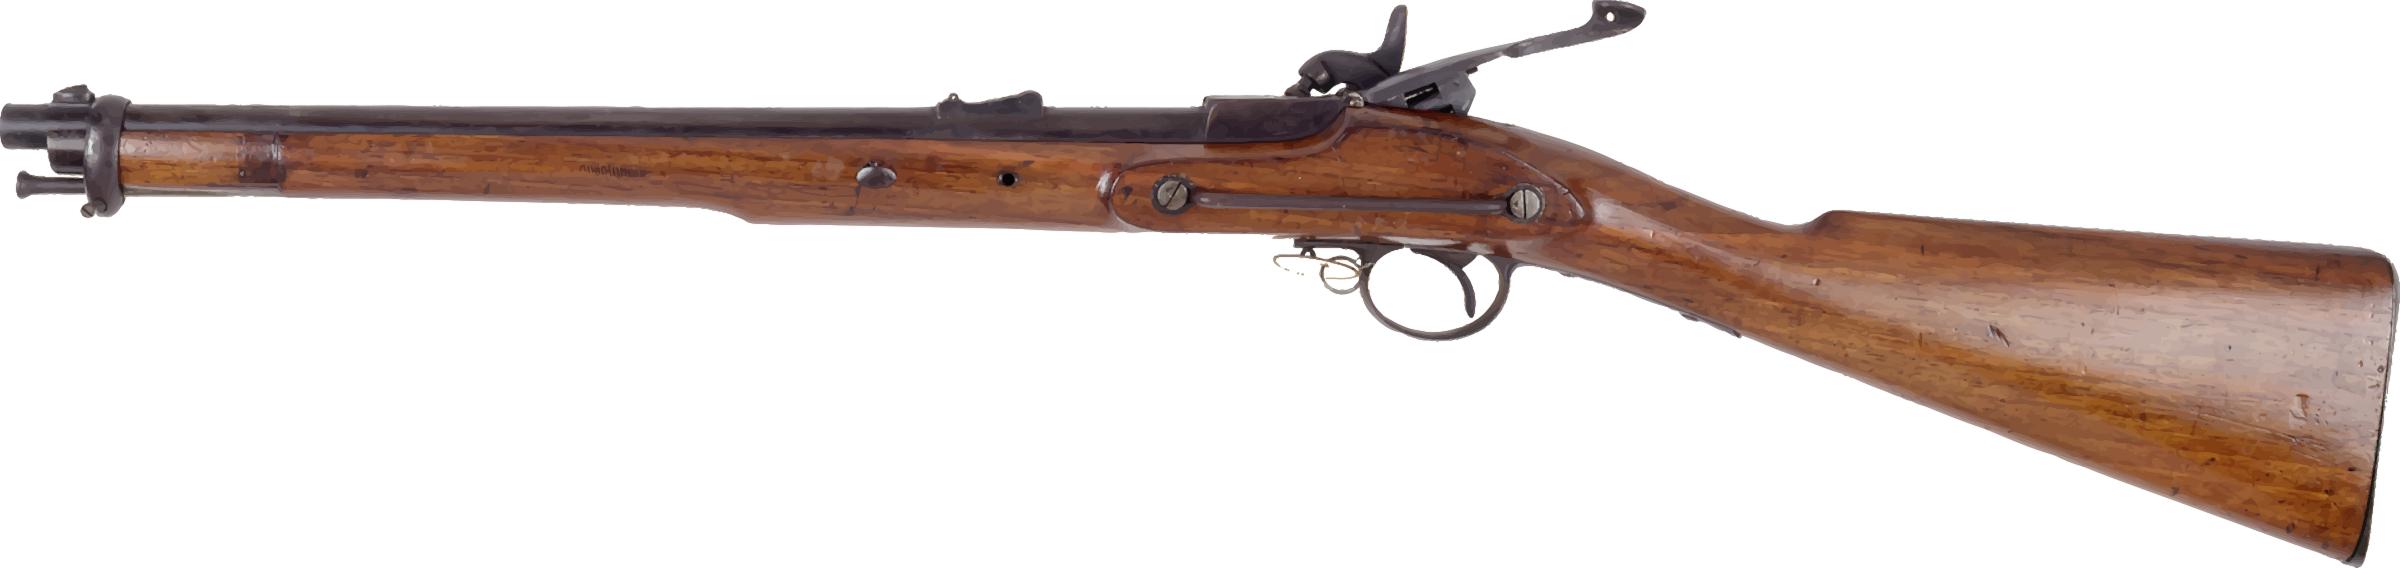 Antique rifle png